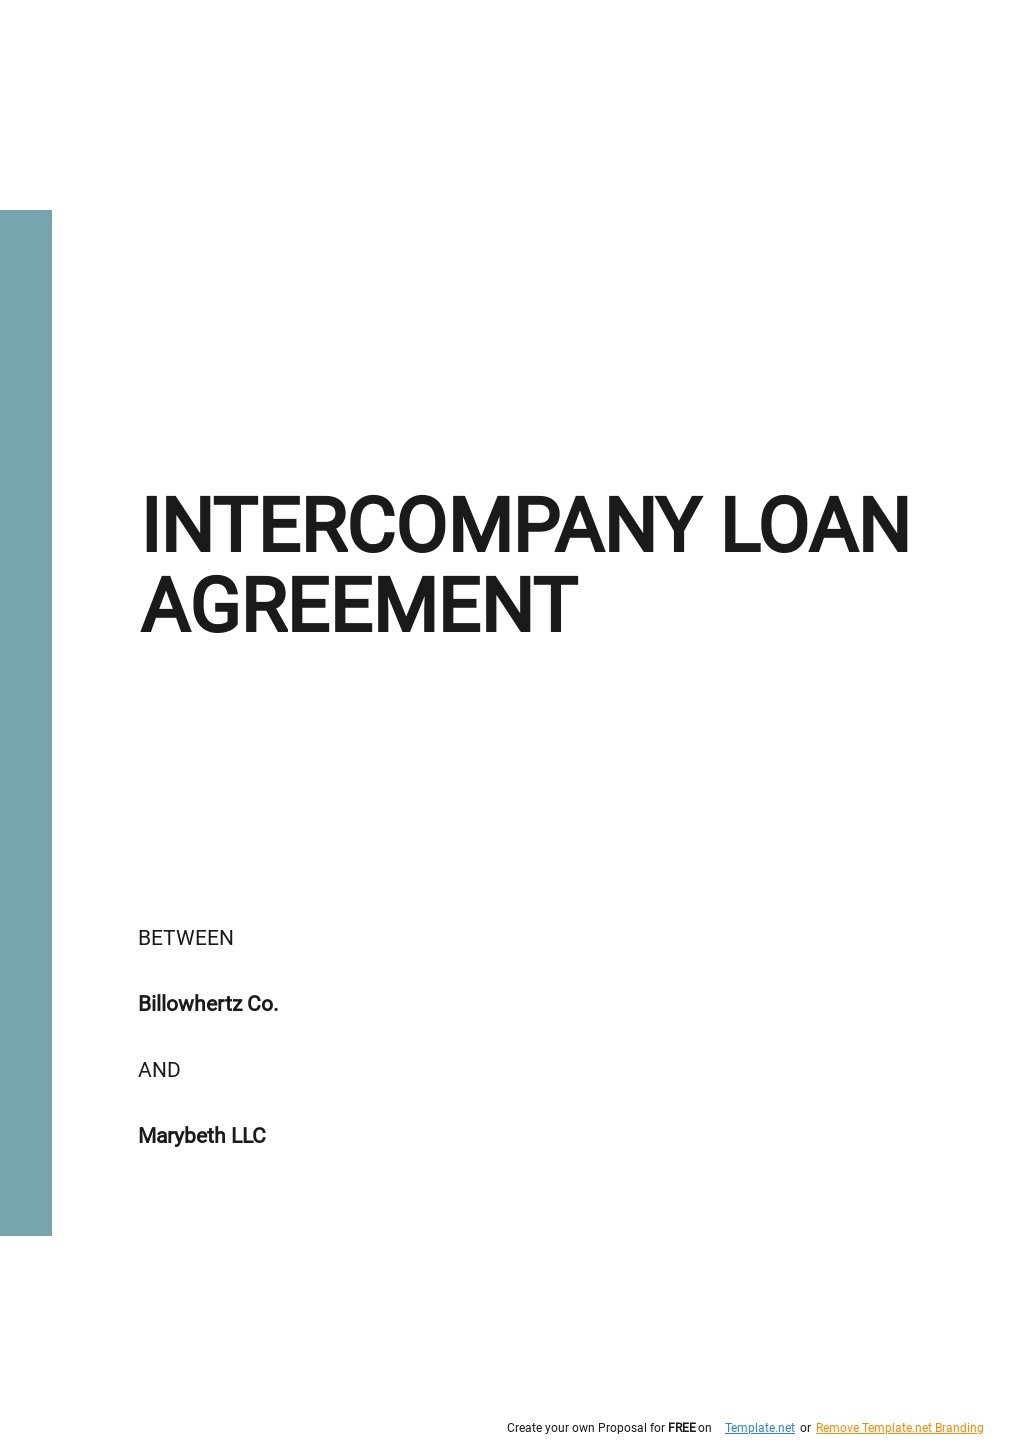 Simple Intercompany Loan Agreement Template.jpe